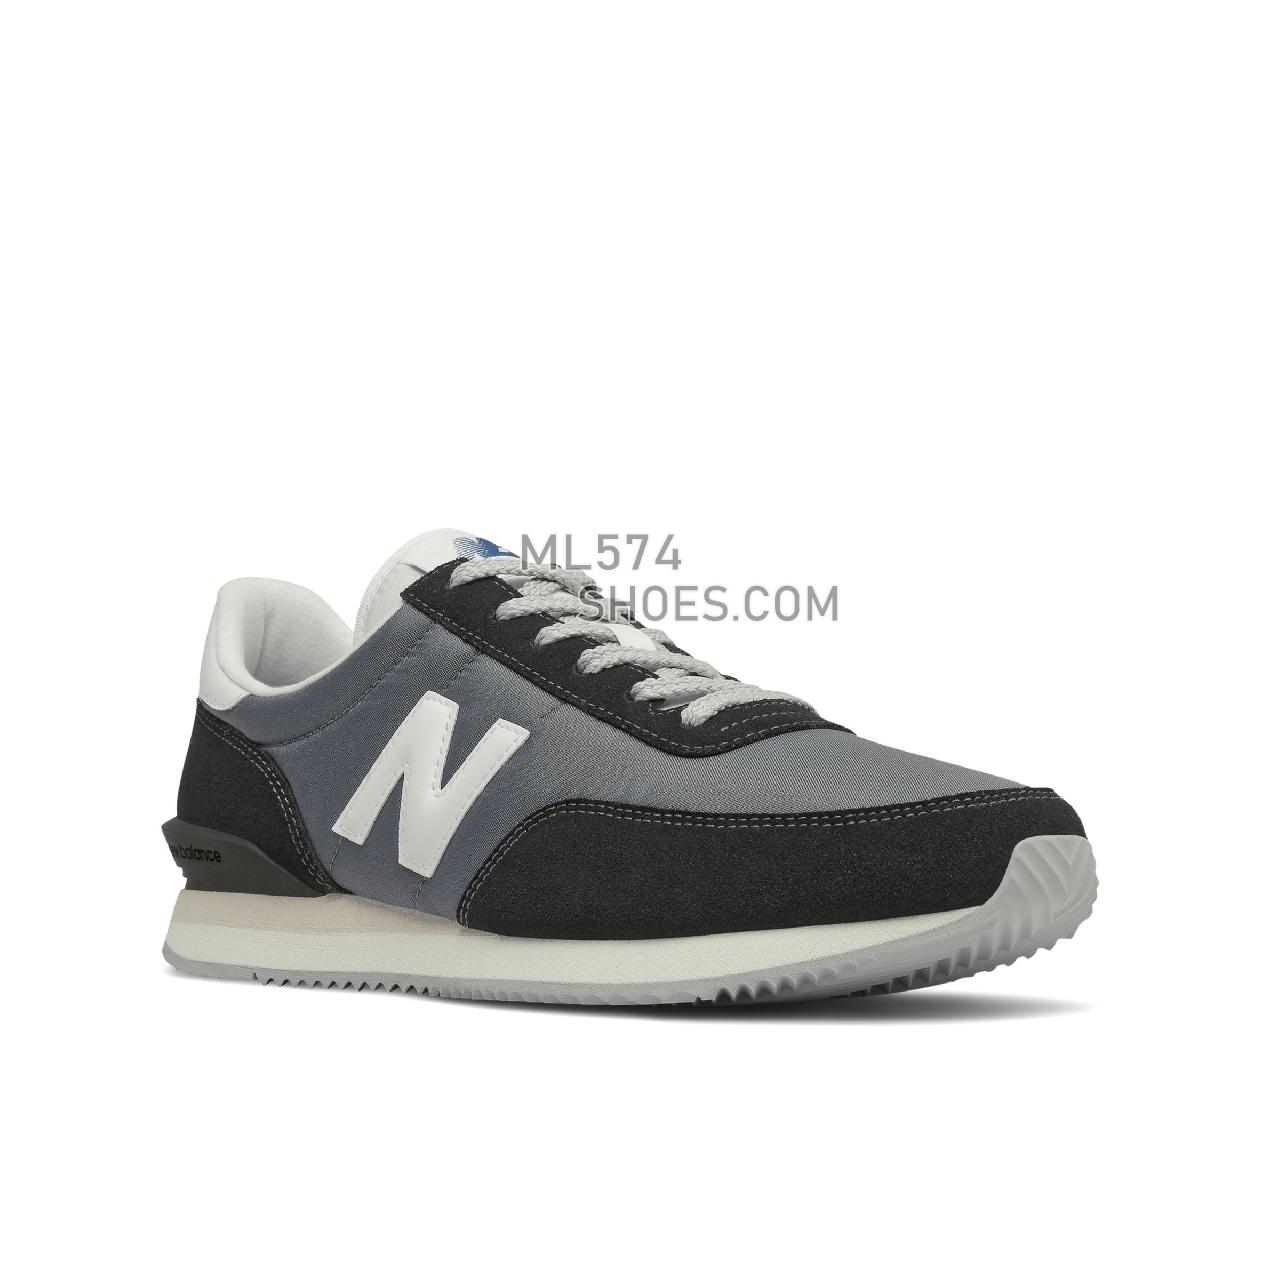 New Balance 720 - Unisex Men's Women's Classic Sneakers - Black with Nb White - UL720MU1